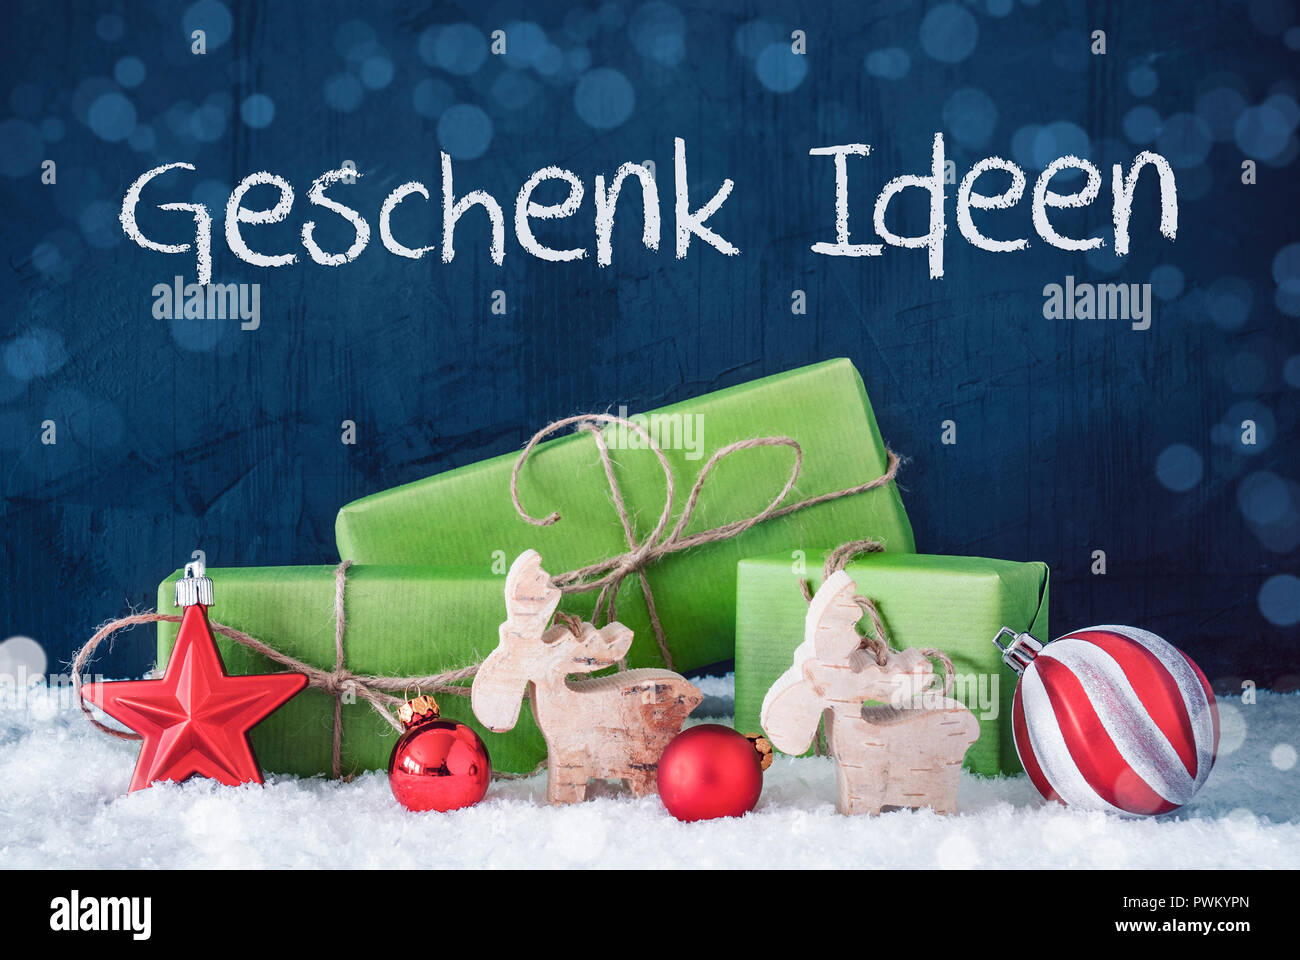 Green Christmas Presents, Snow, Geschenk Ideen Means Gift Idea Stock Photo